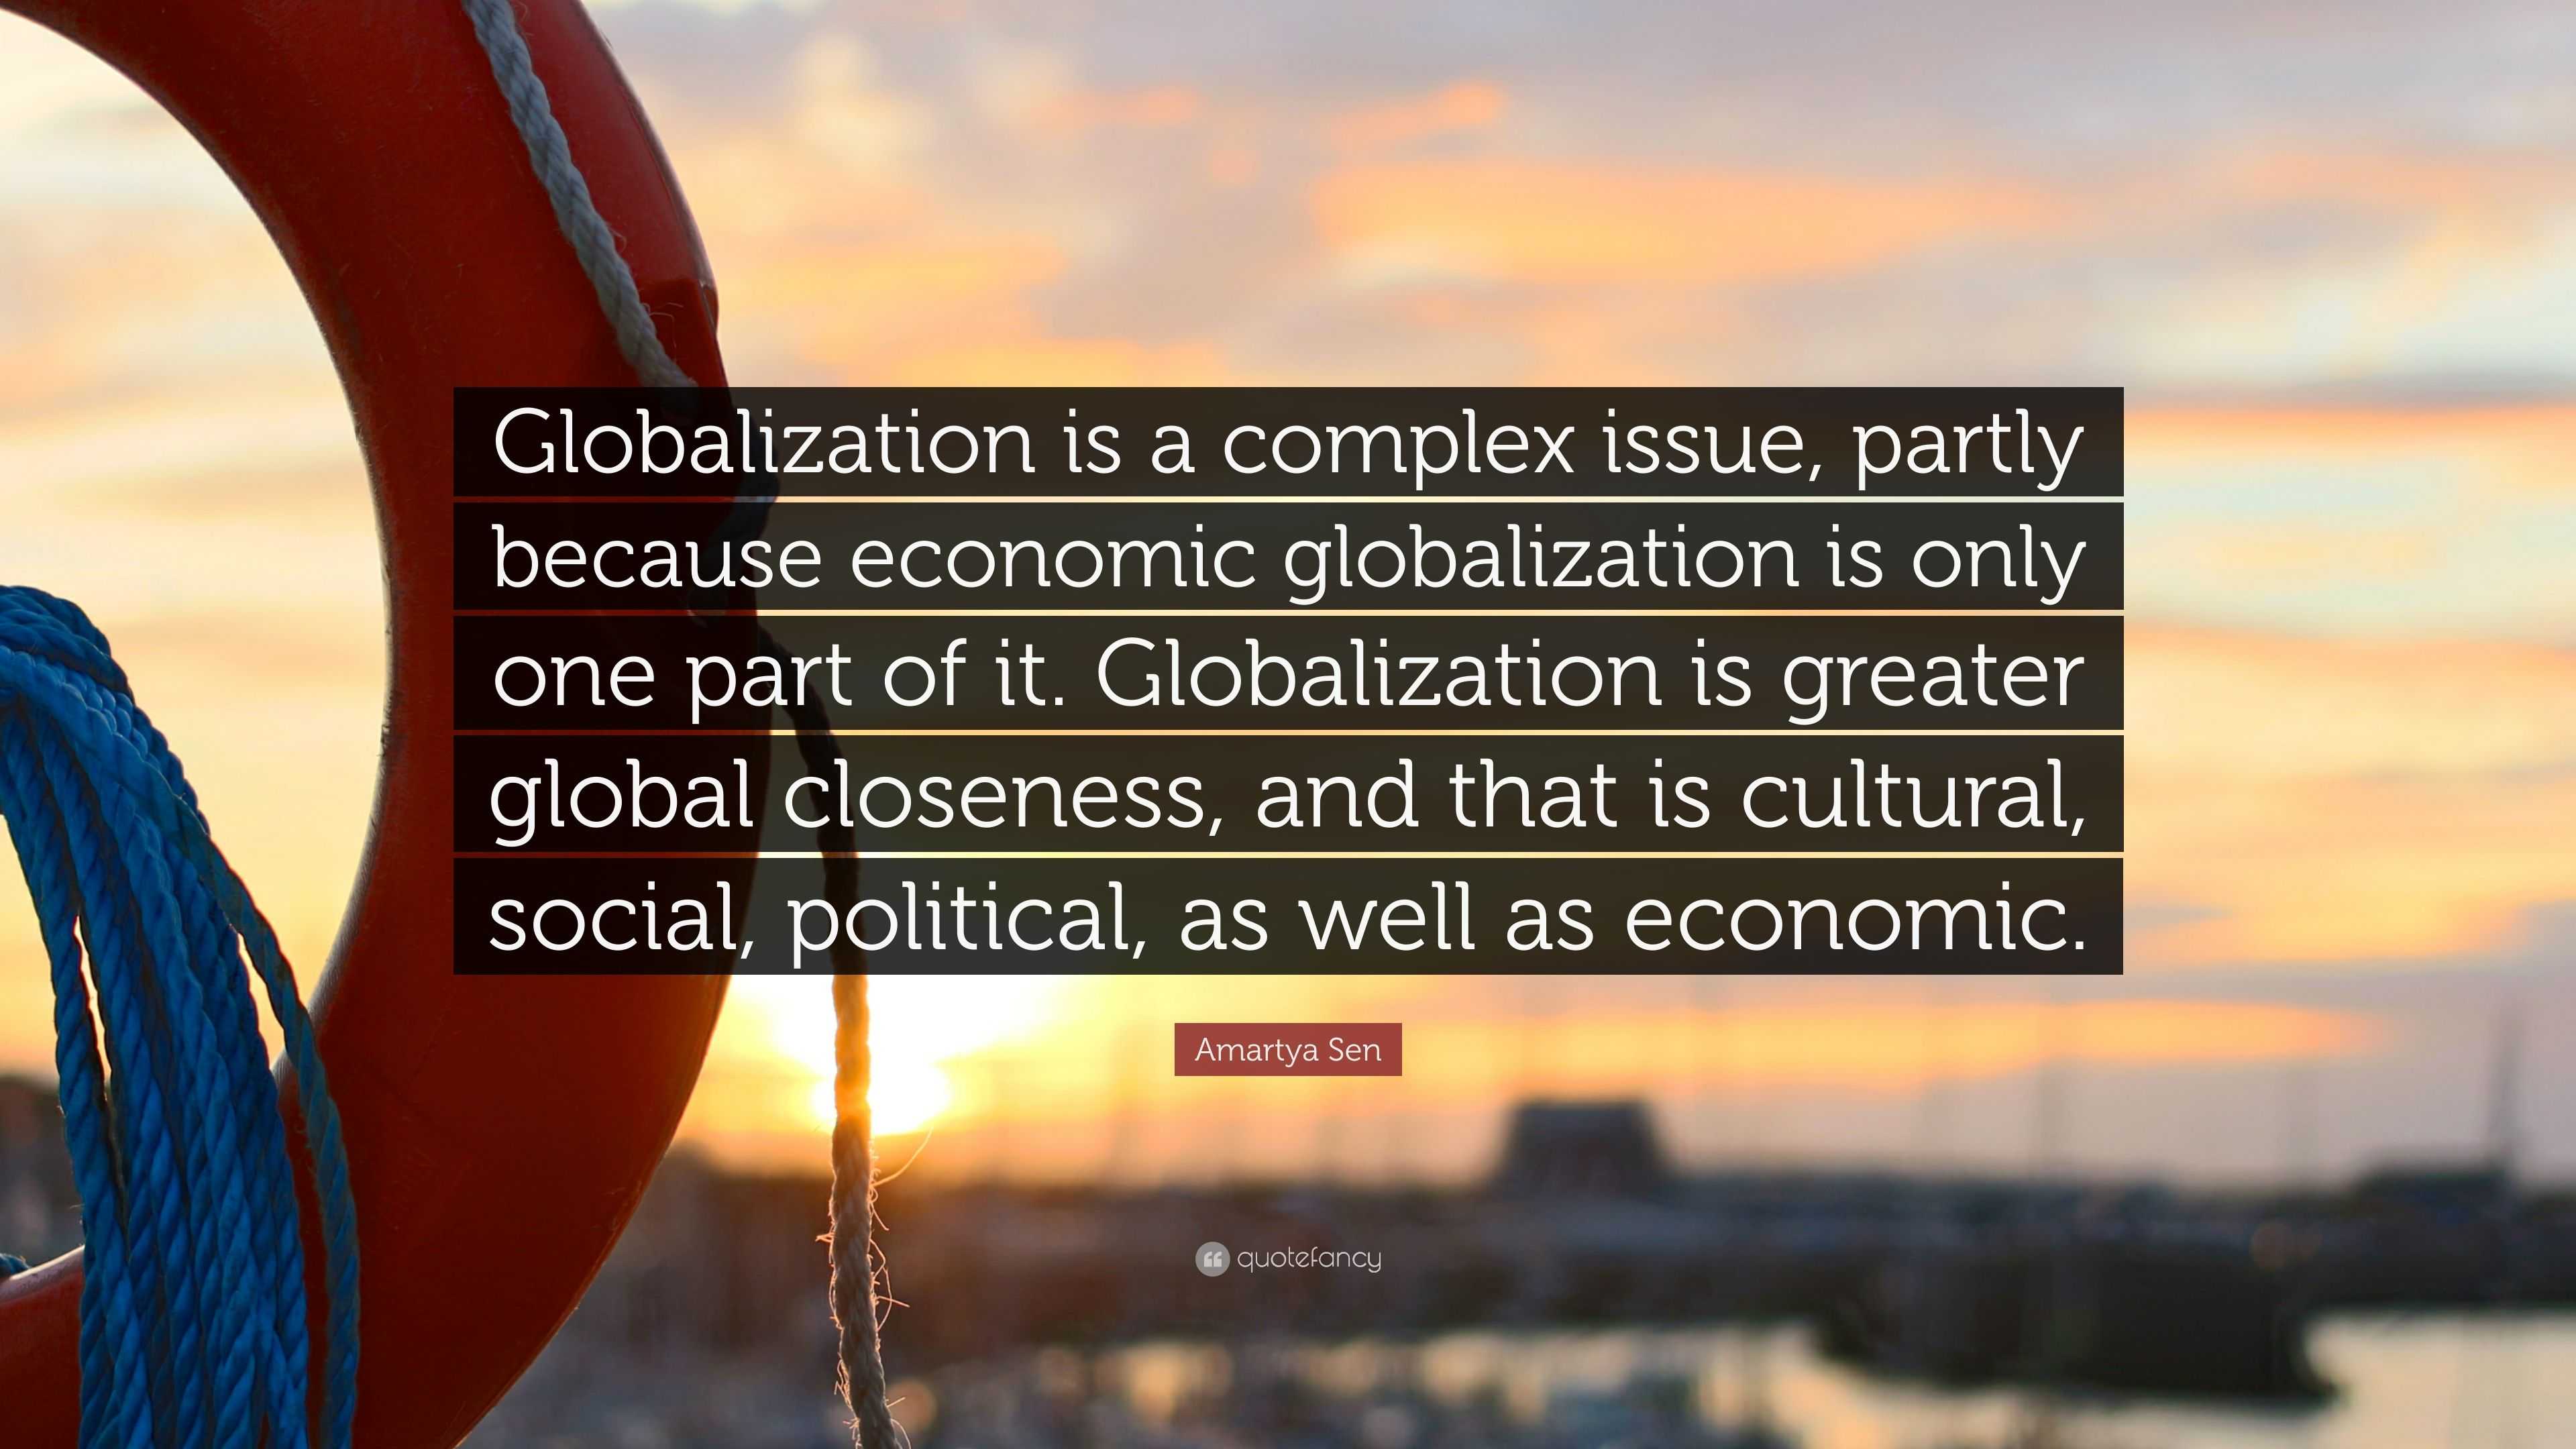 hypothesis regarding globalization